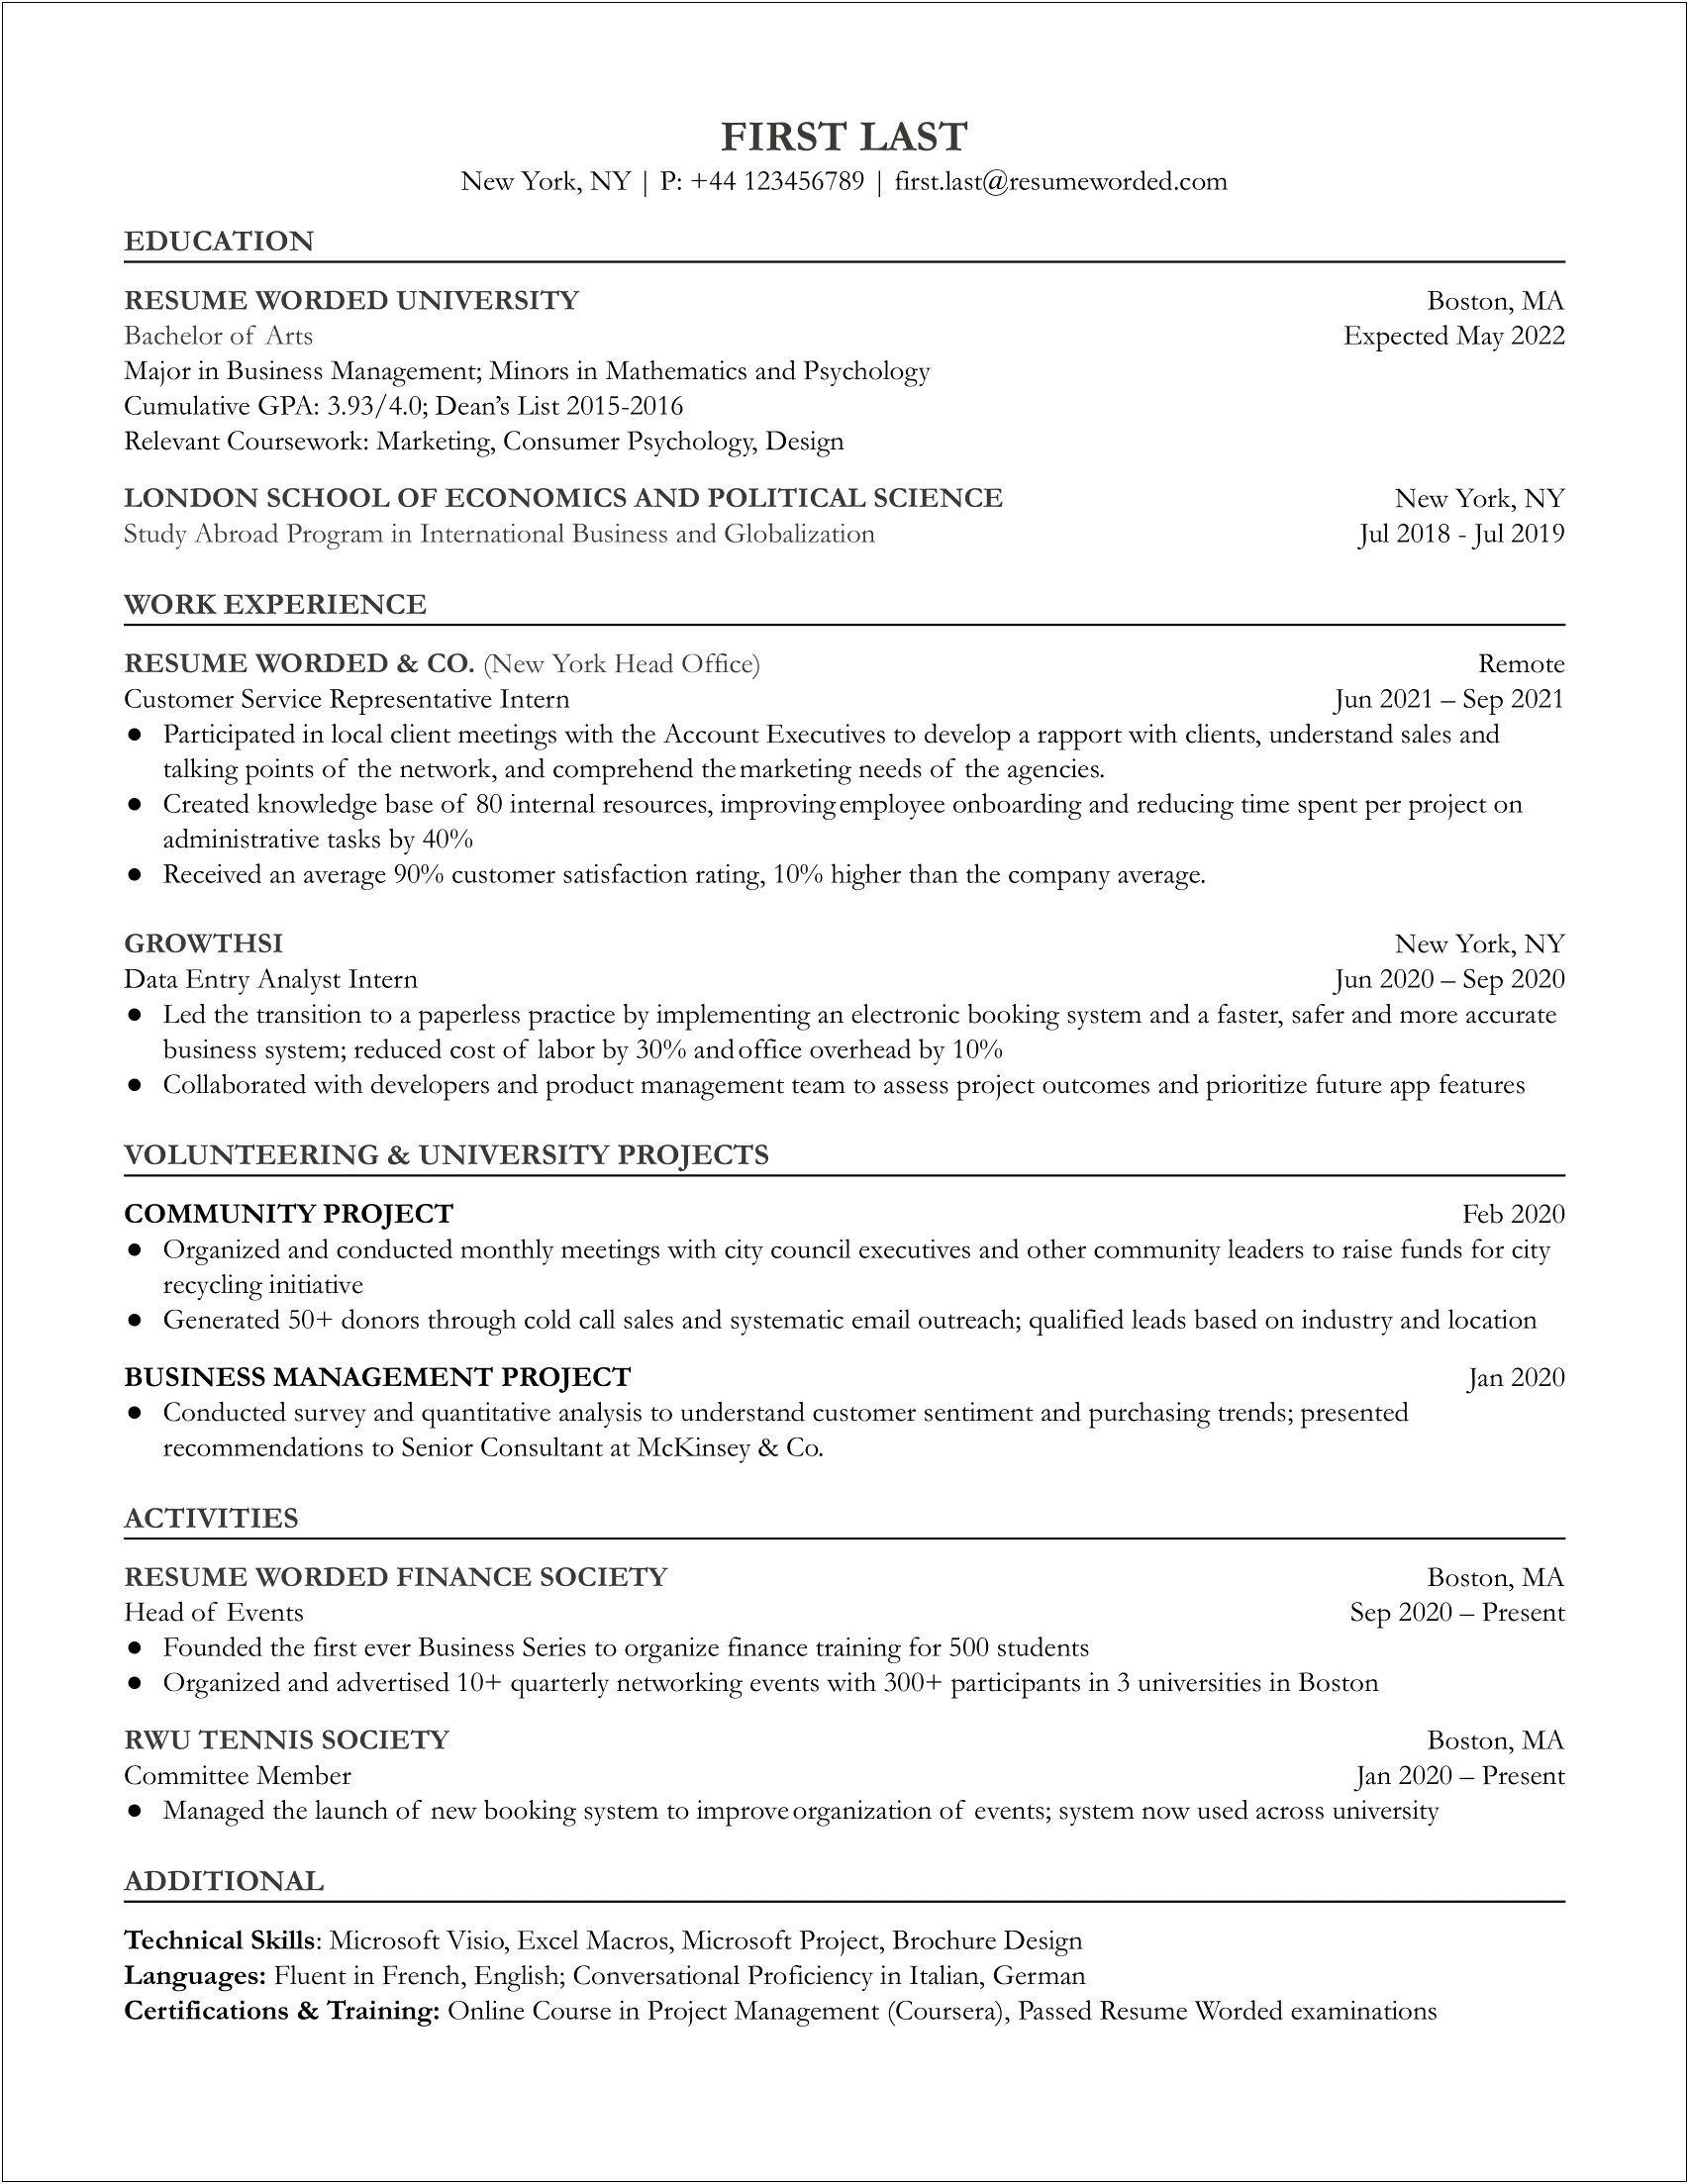 Sample Resume For Customer Care Representative